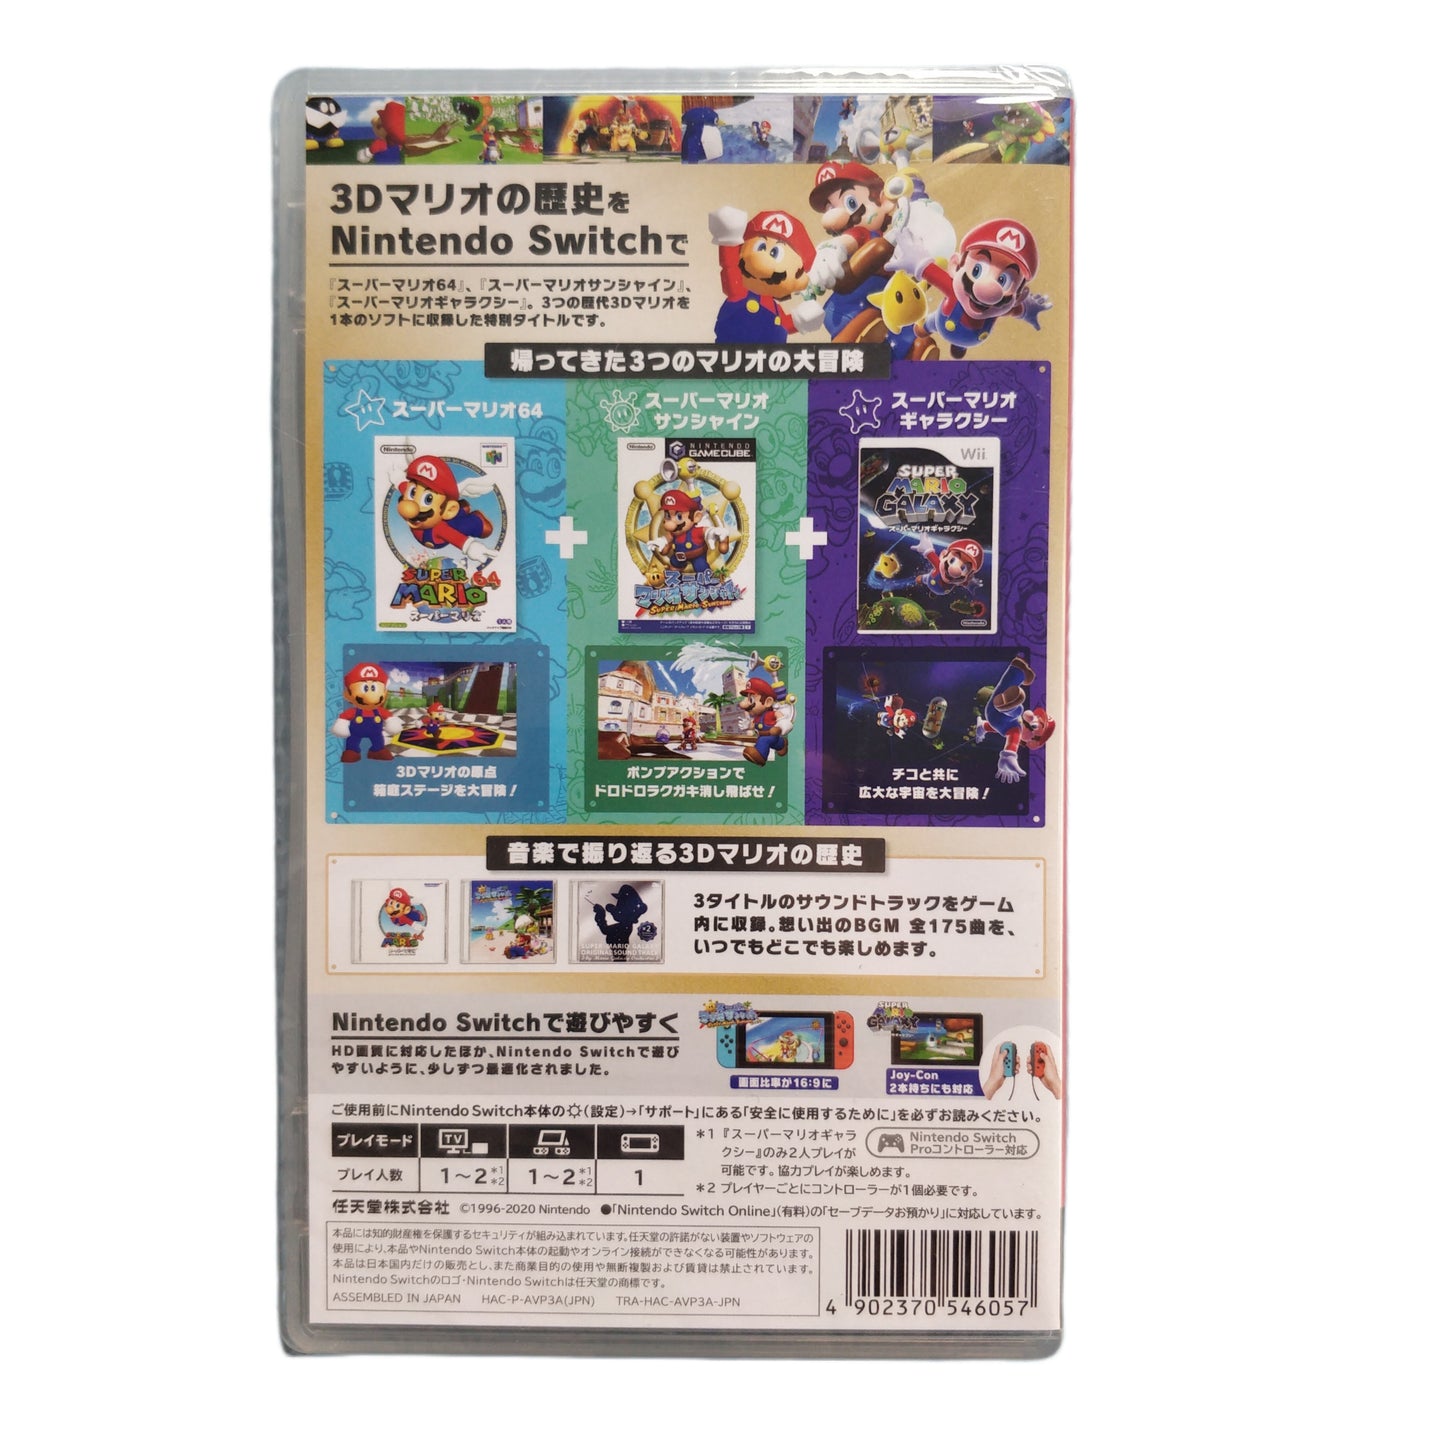 BS Super Mario Collection  BSスーパーマリオコレクション para